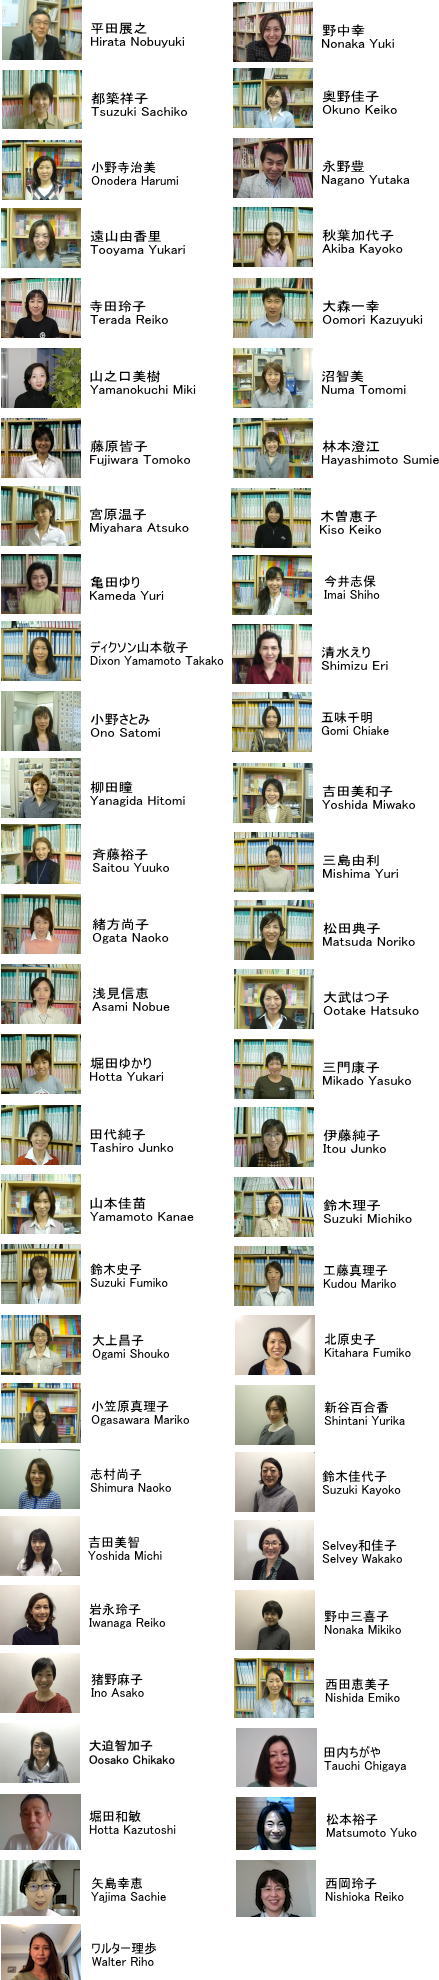 MLC Japanese teachers